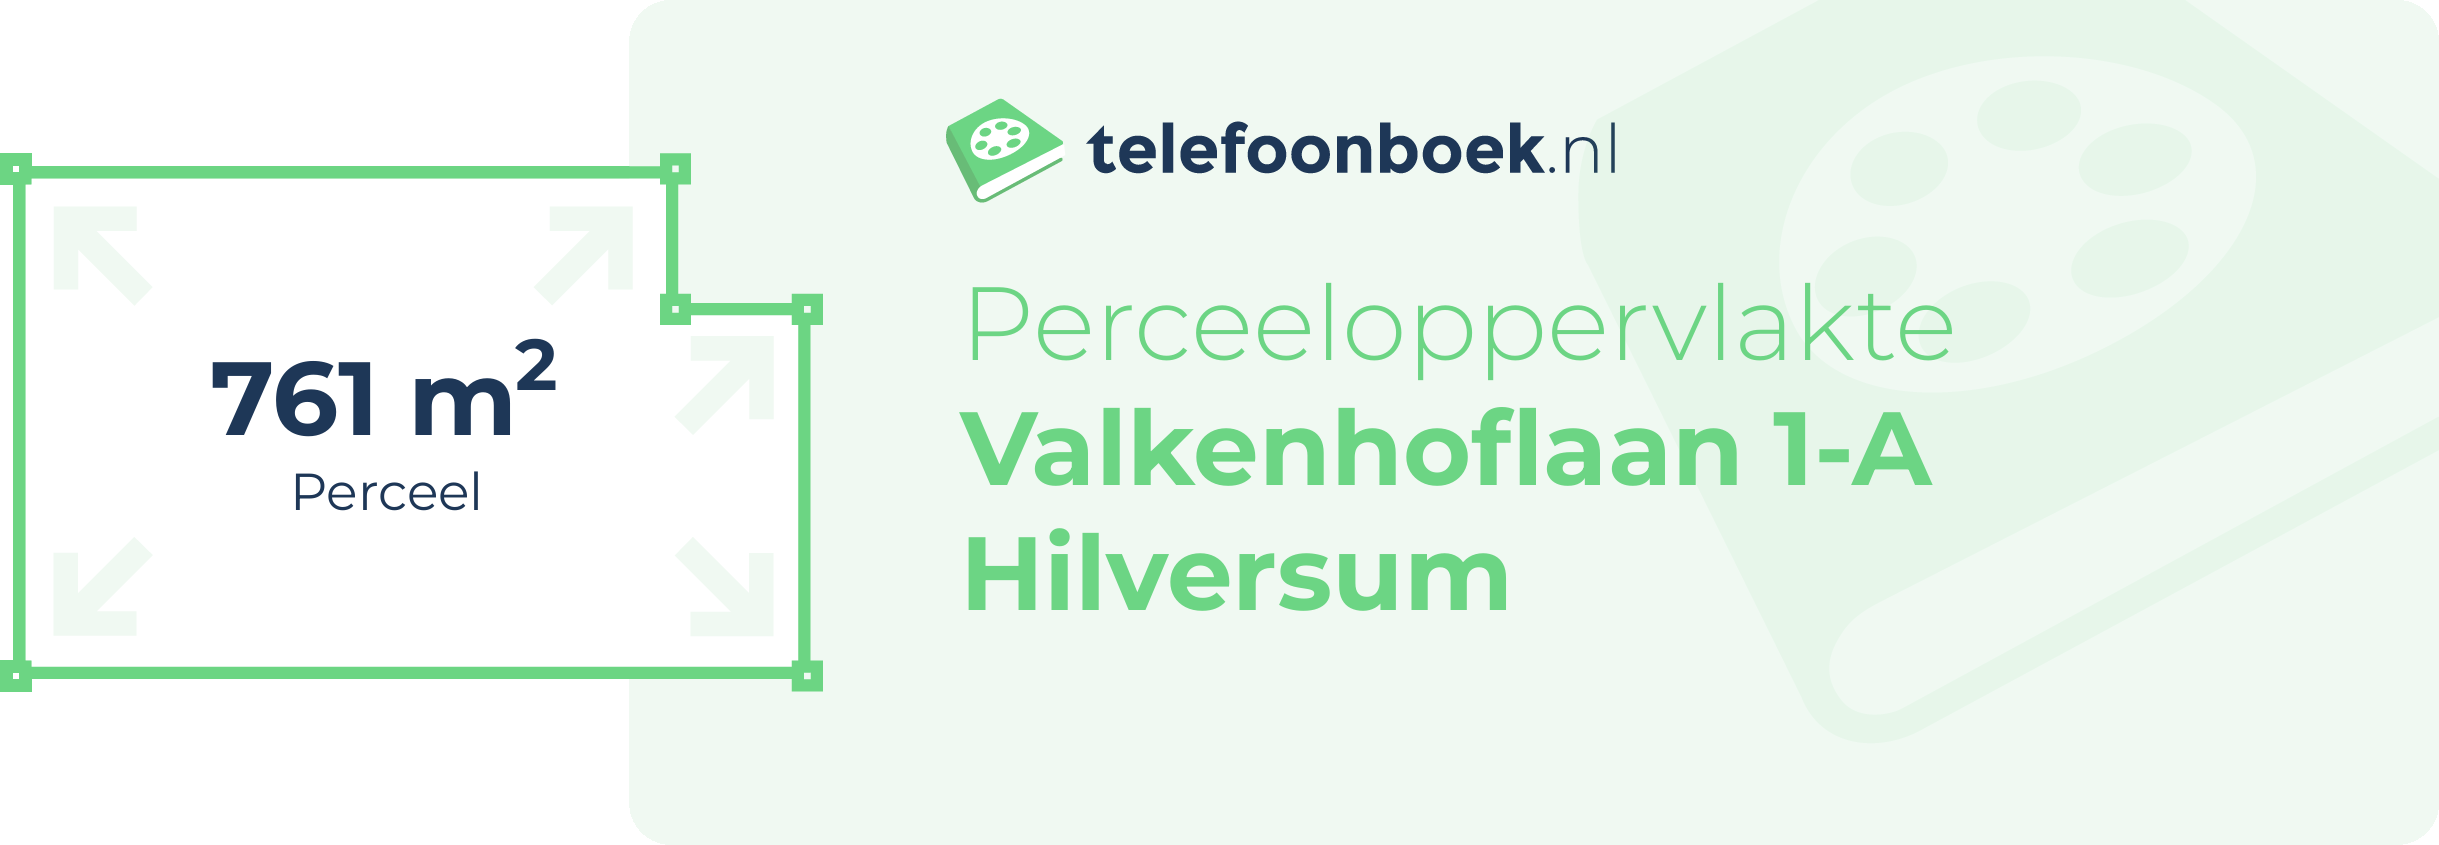 Perceeloppervlakte Valkenhoflaan 1-A Hilversum